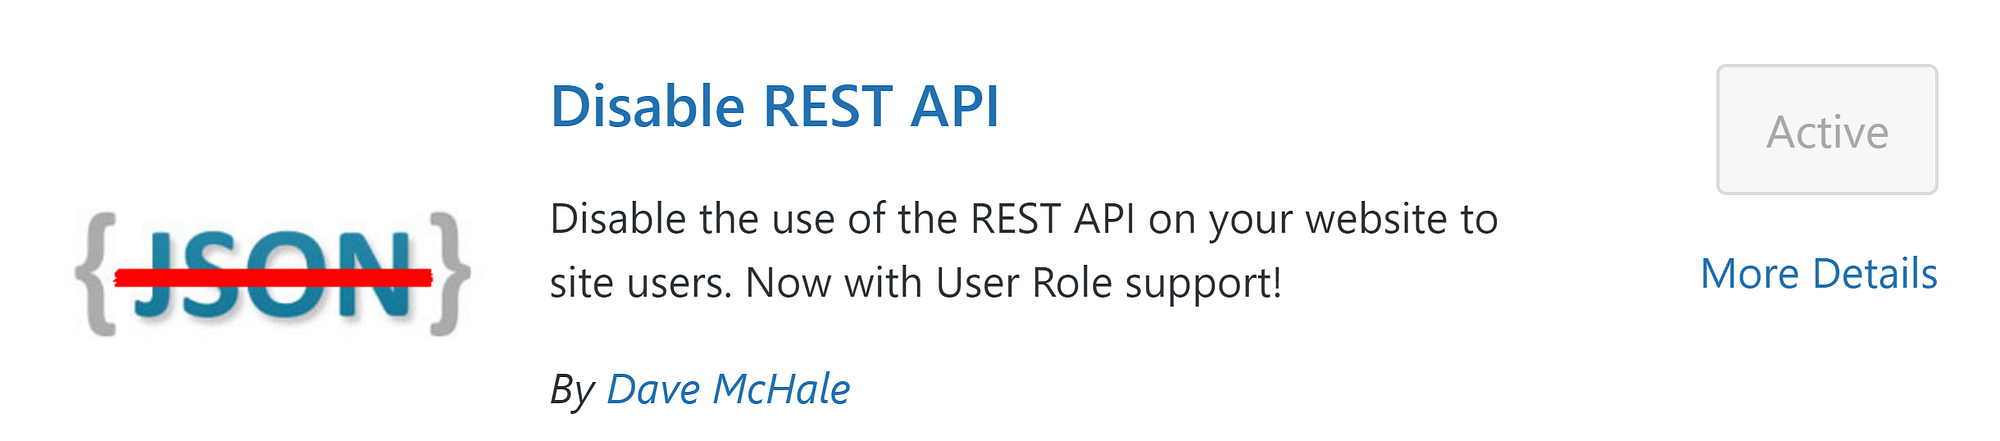 Disable REST API